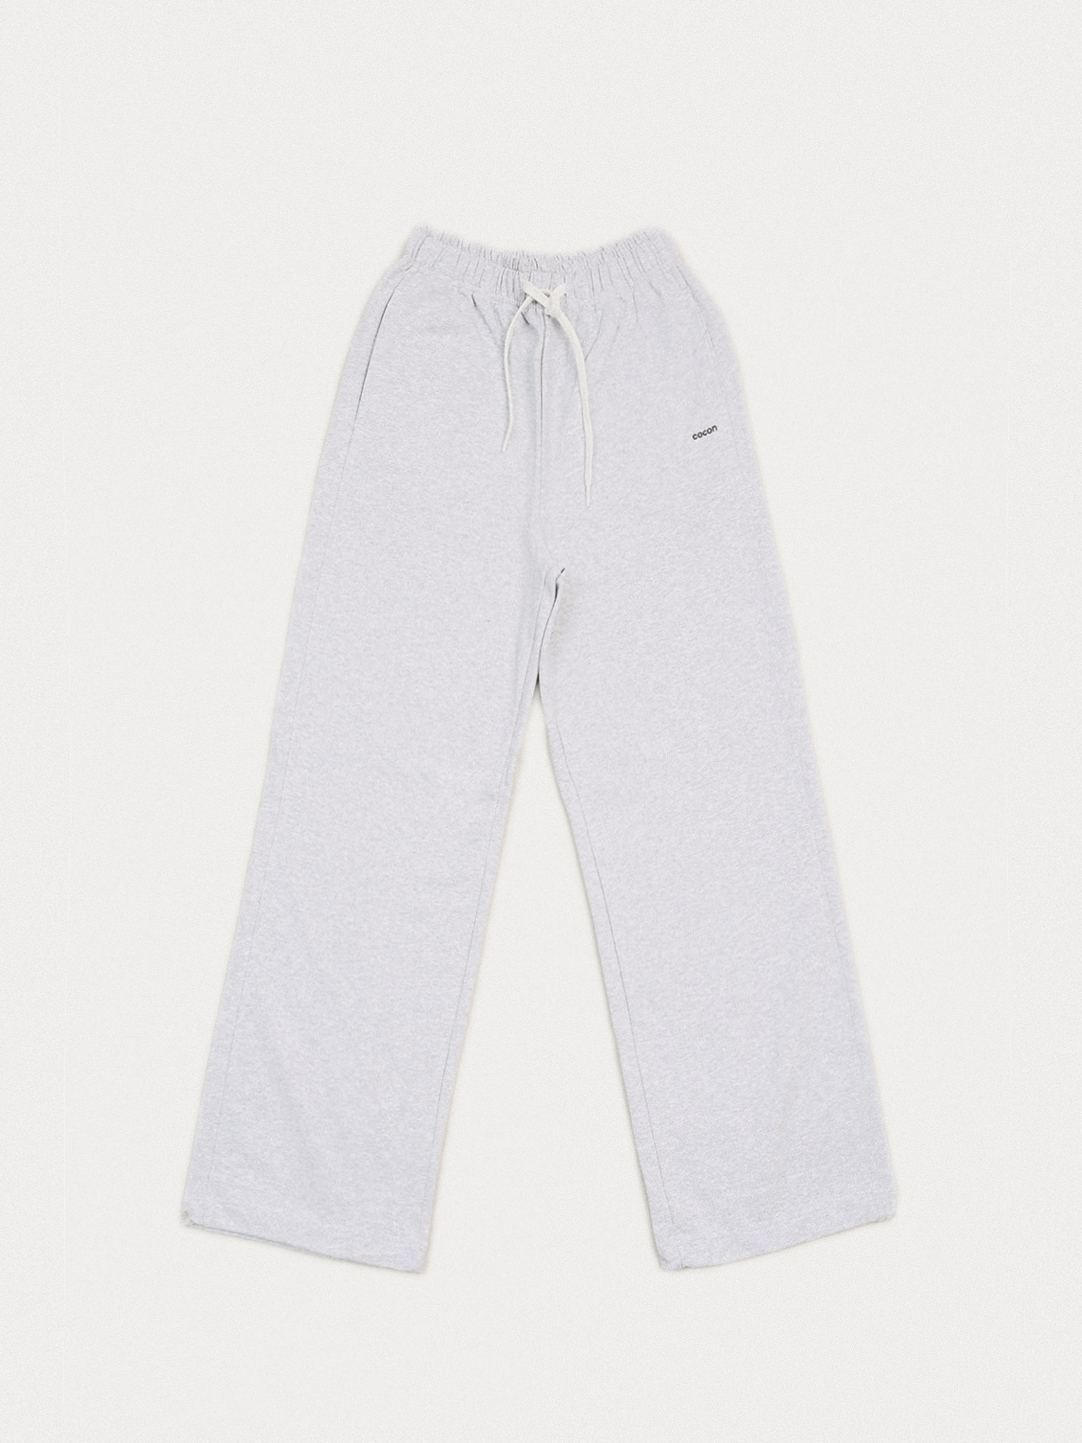 Classic sweat pants (Melange grey)